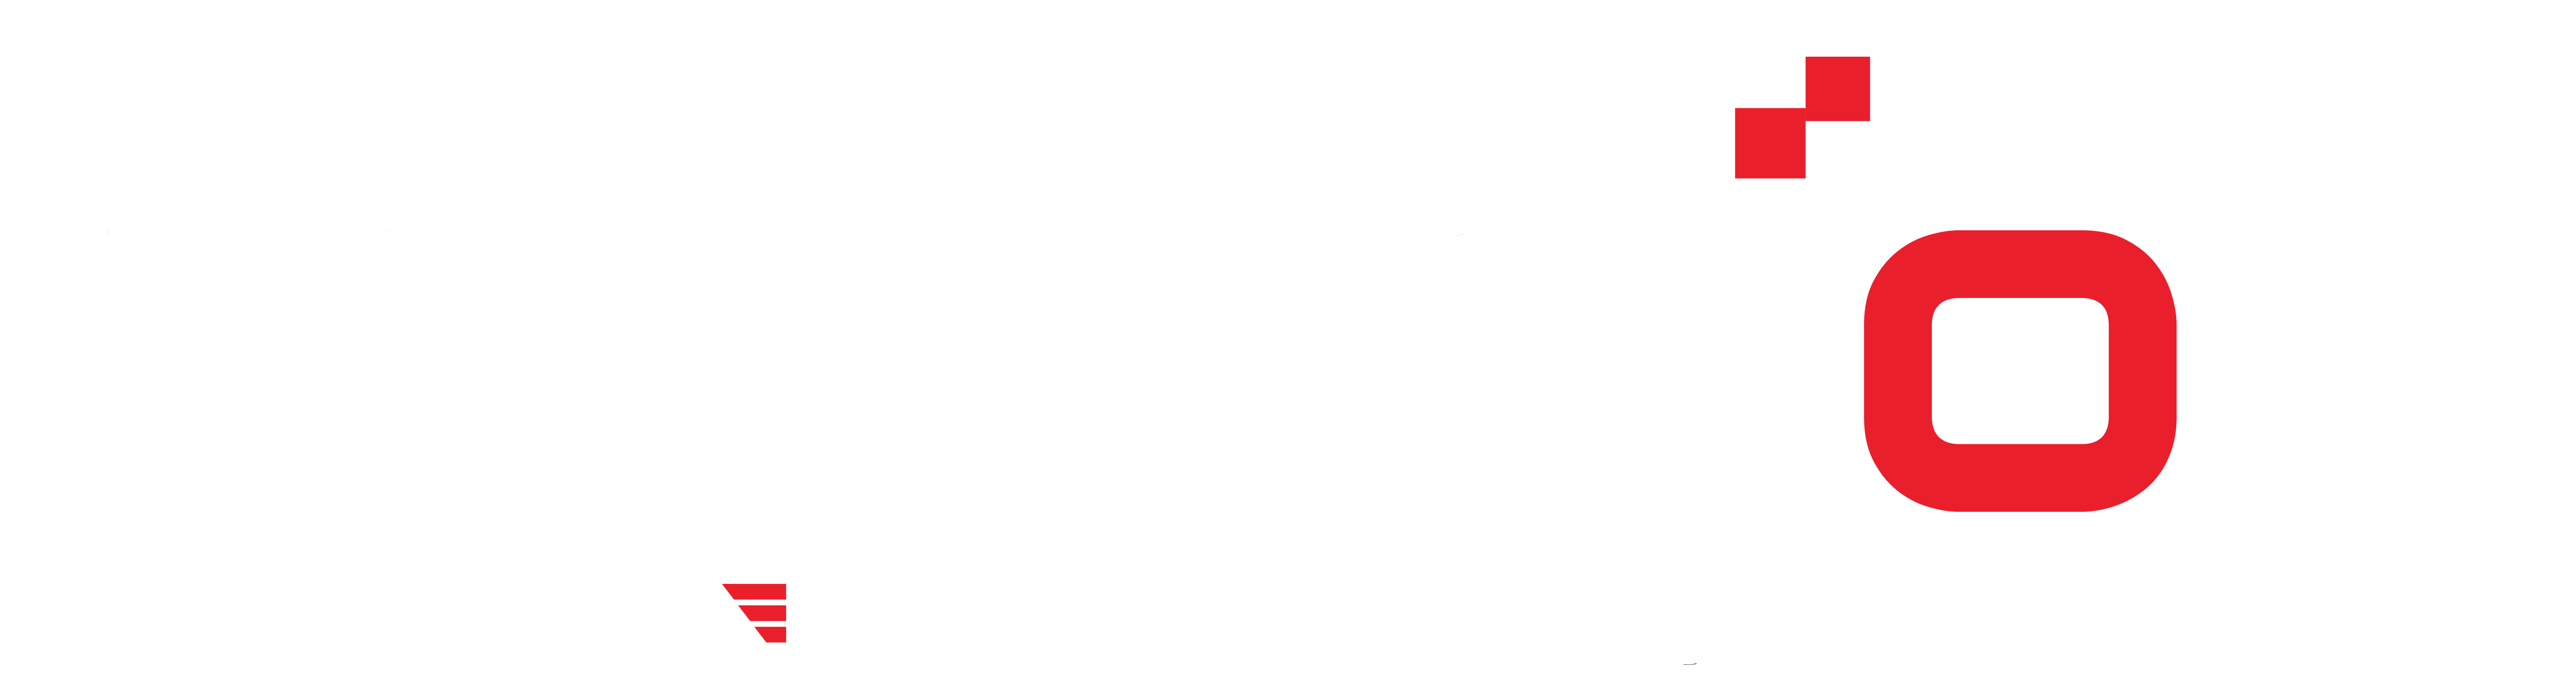 inclusionsoft logo